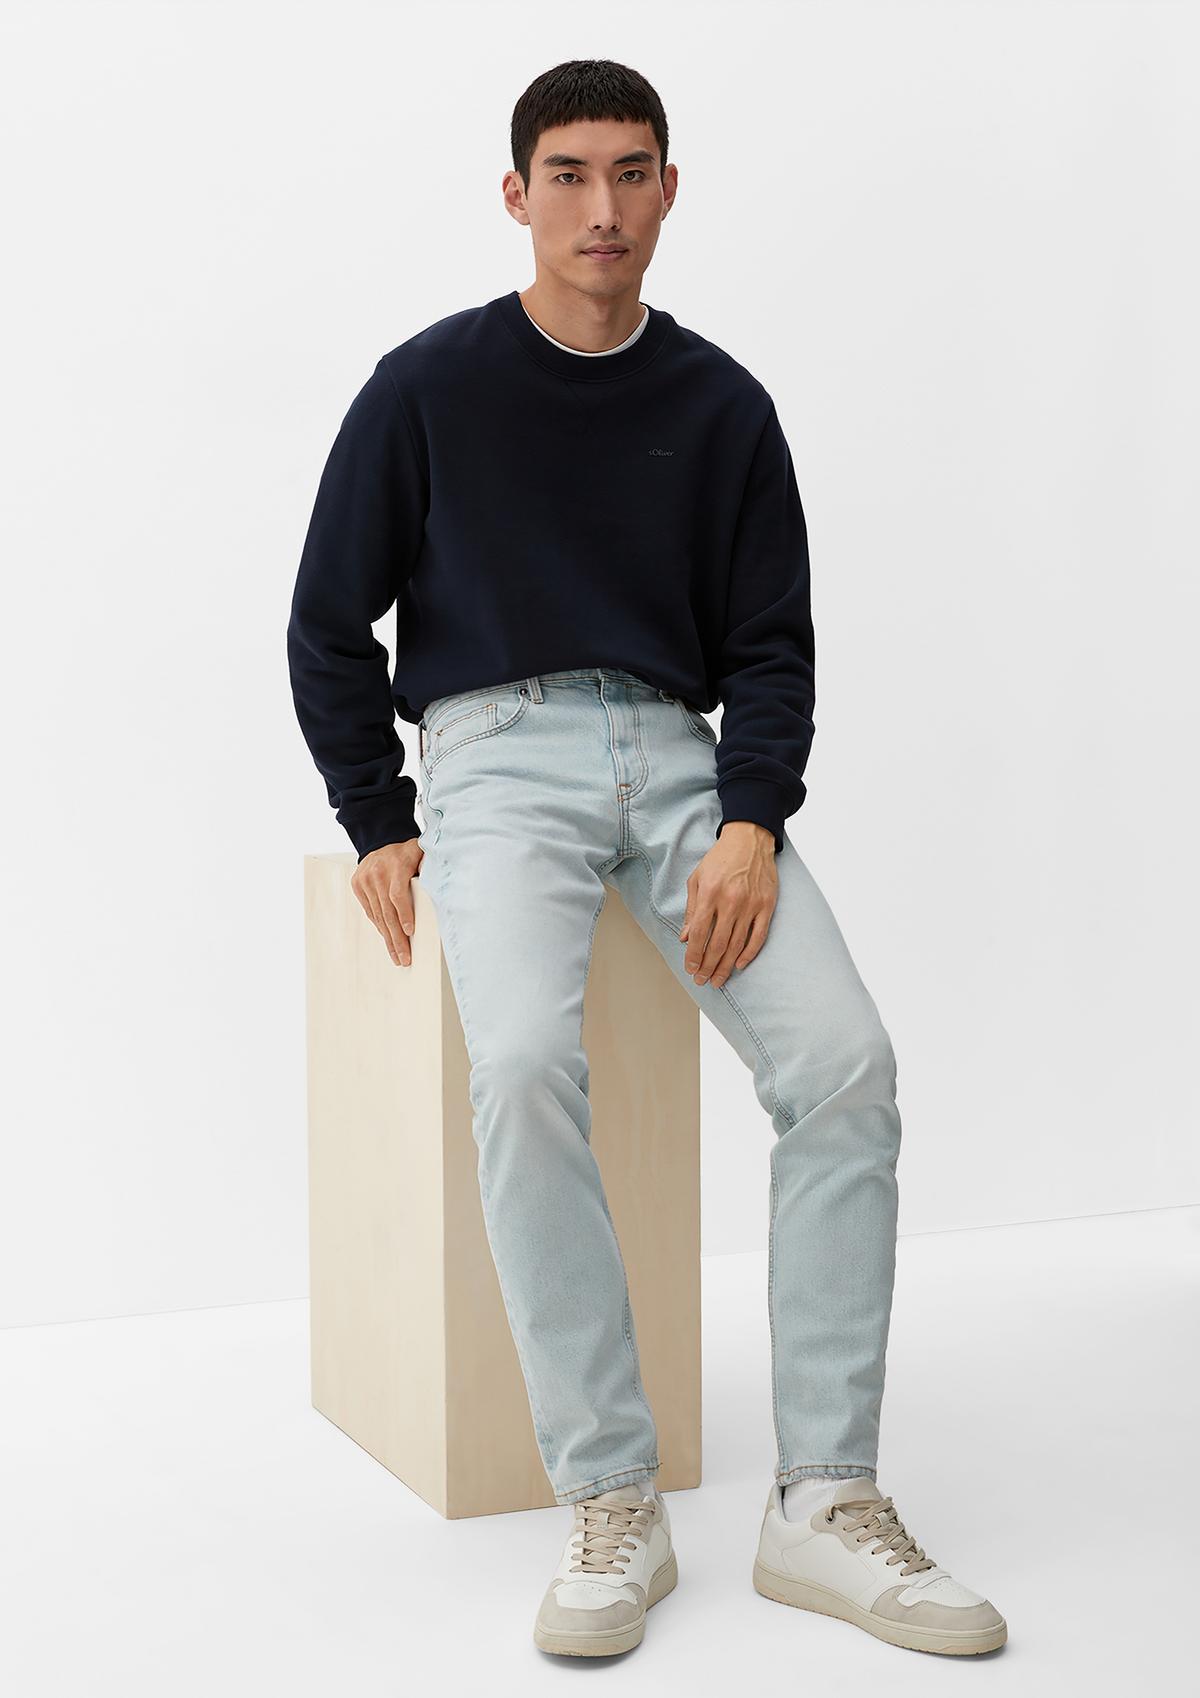 Jeans / regular fit / mid rise / straight leg - light blue